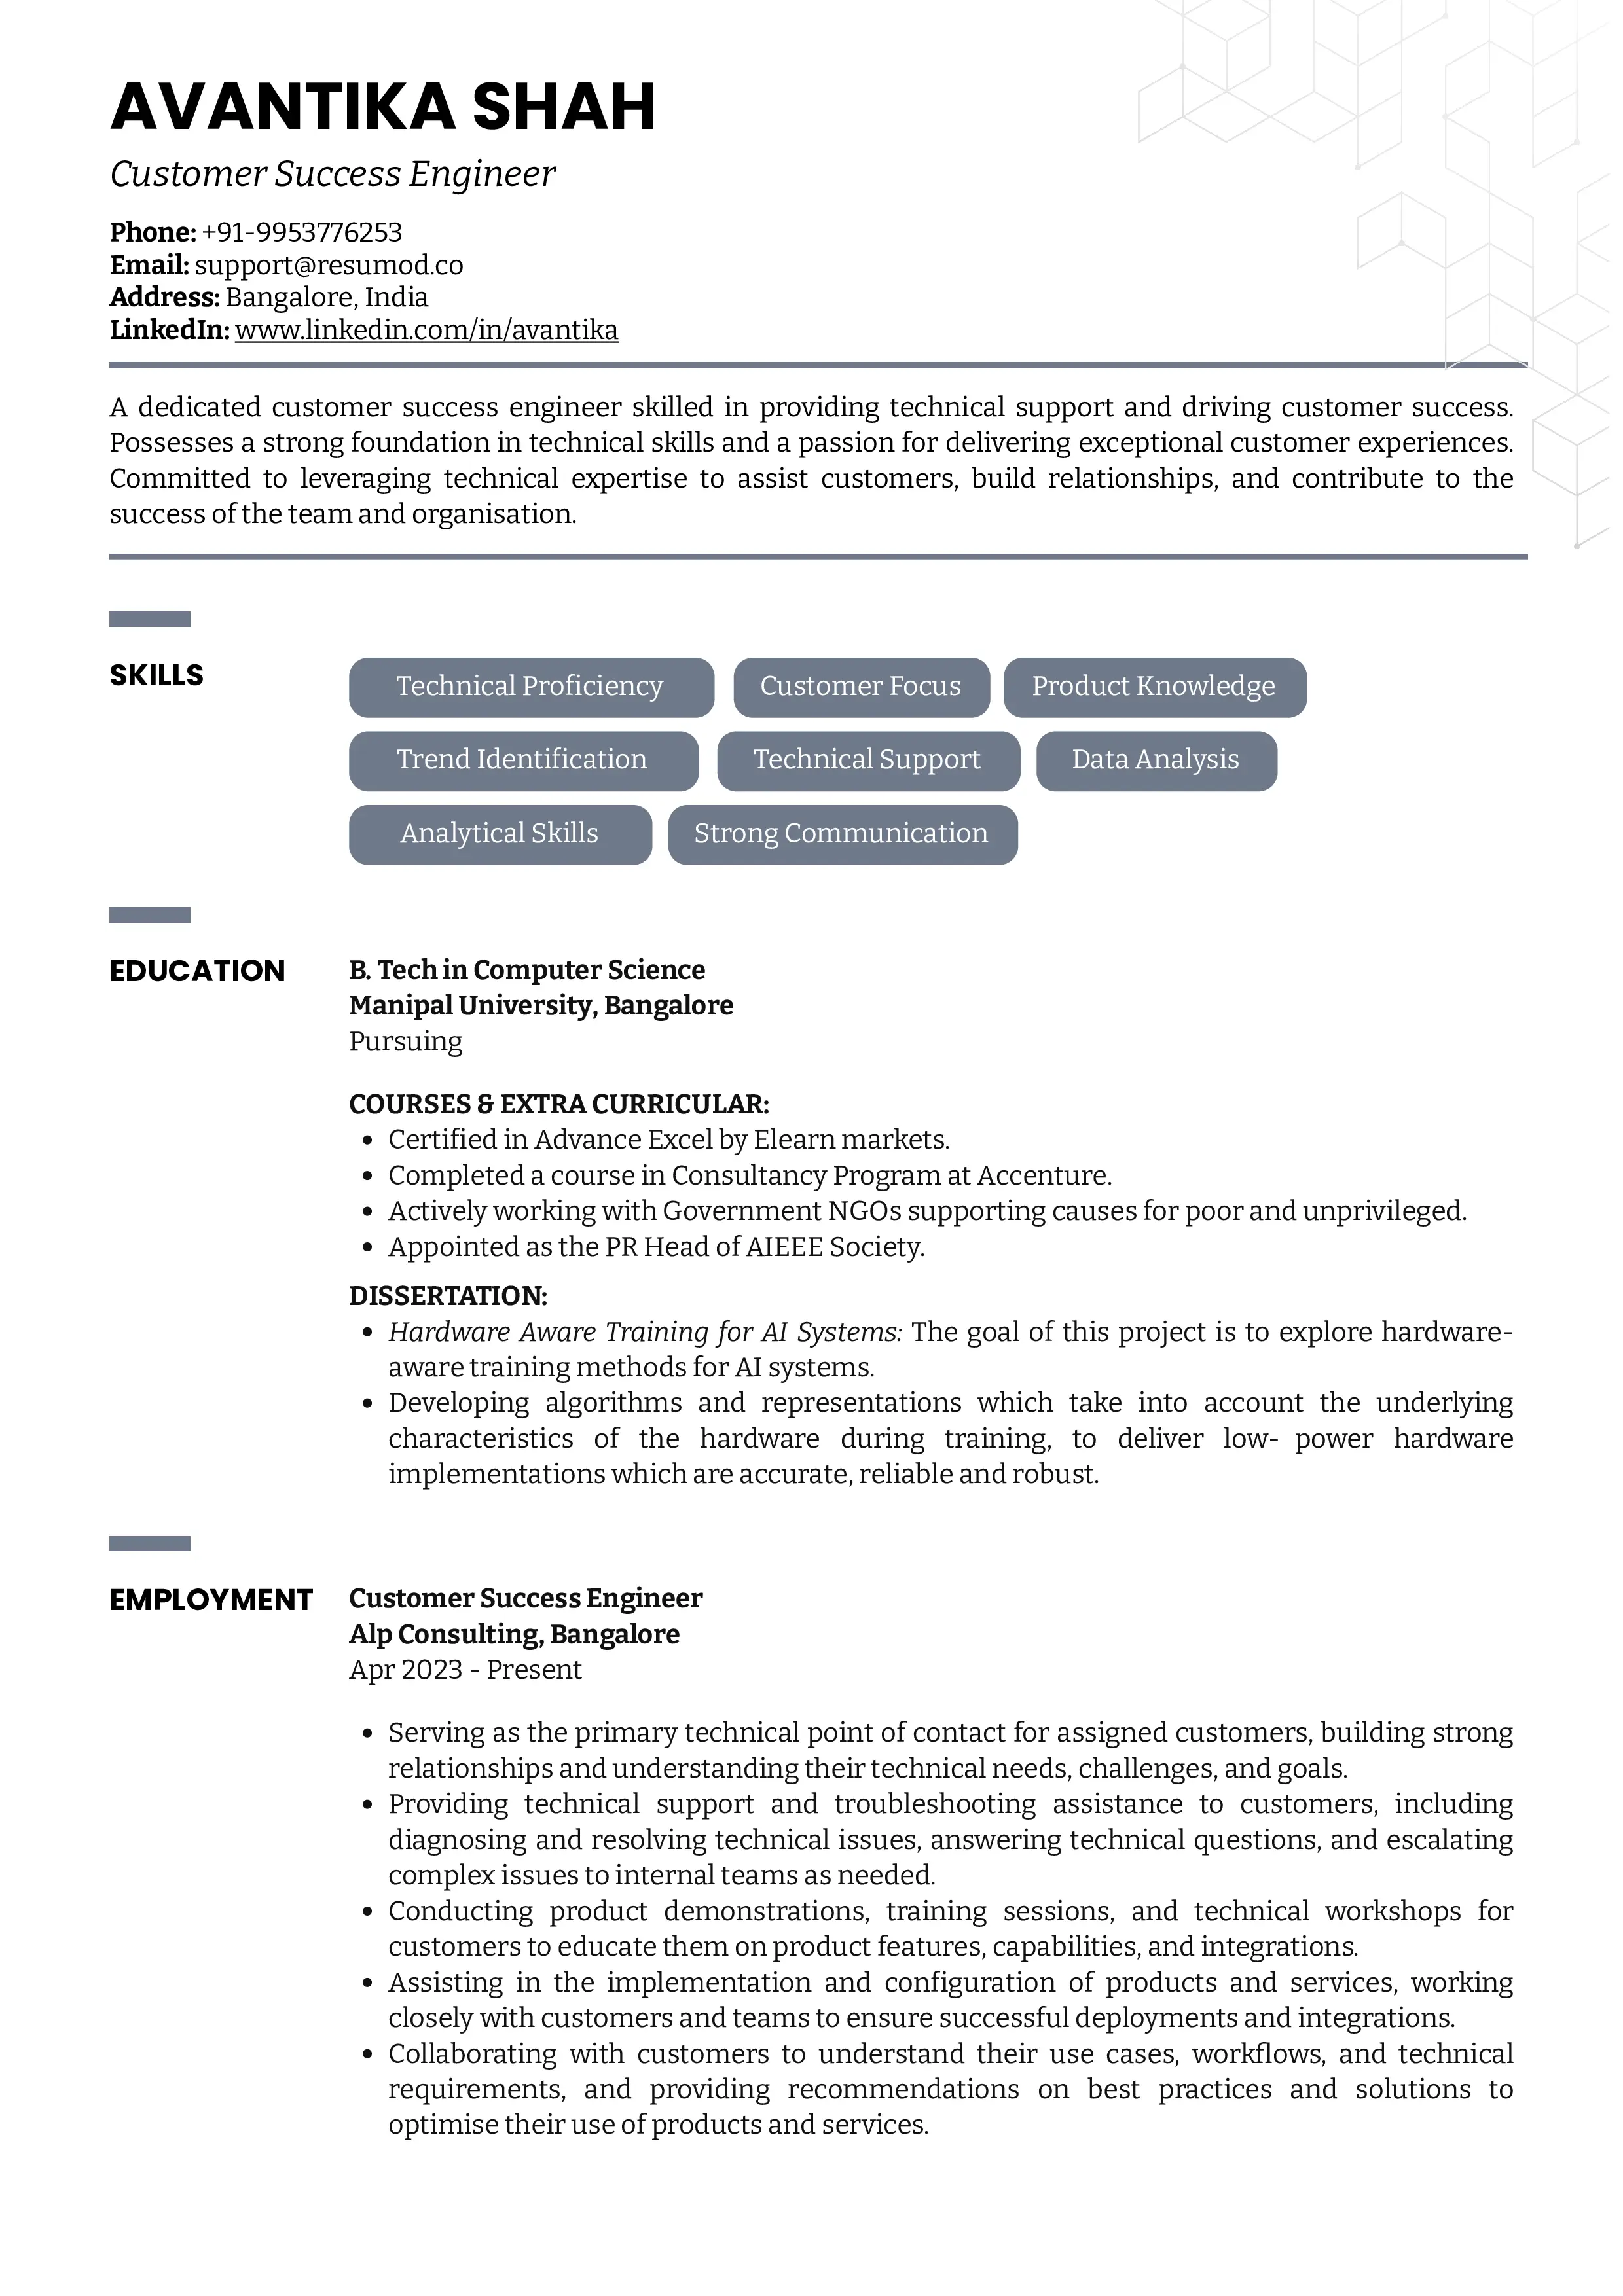 Sample Resume of Customer Success Engineer | Free Resume Templates & Samples on Resumod.co